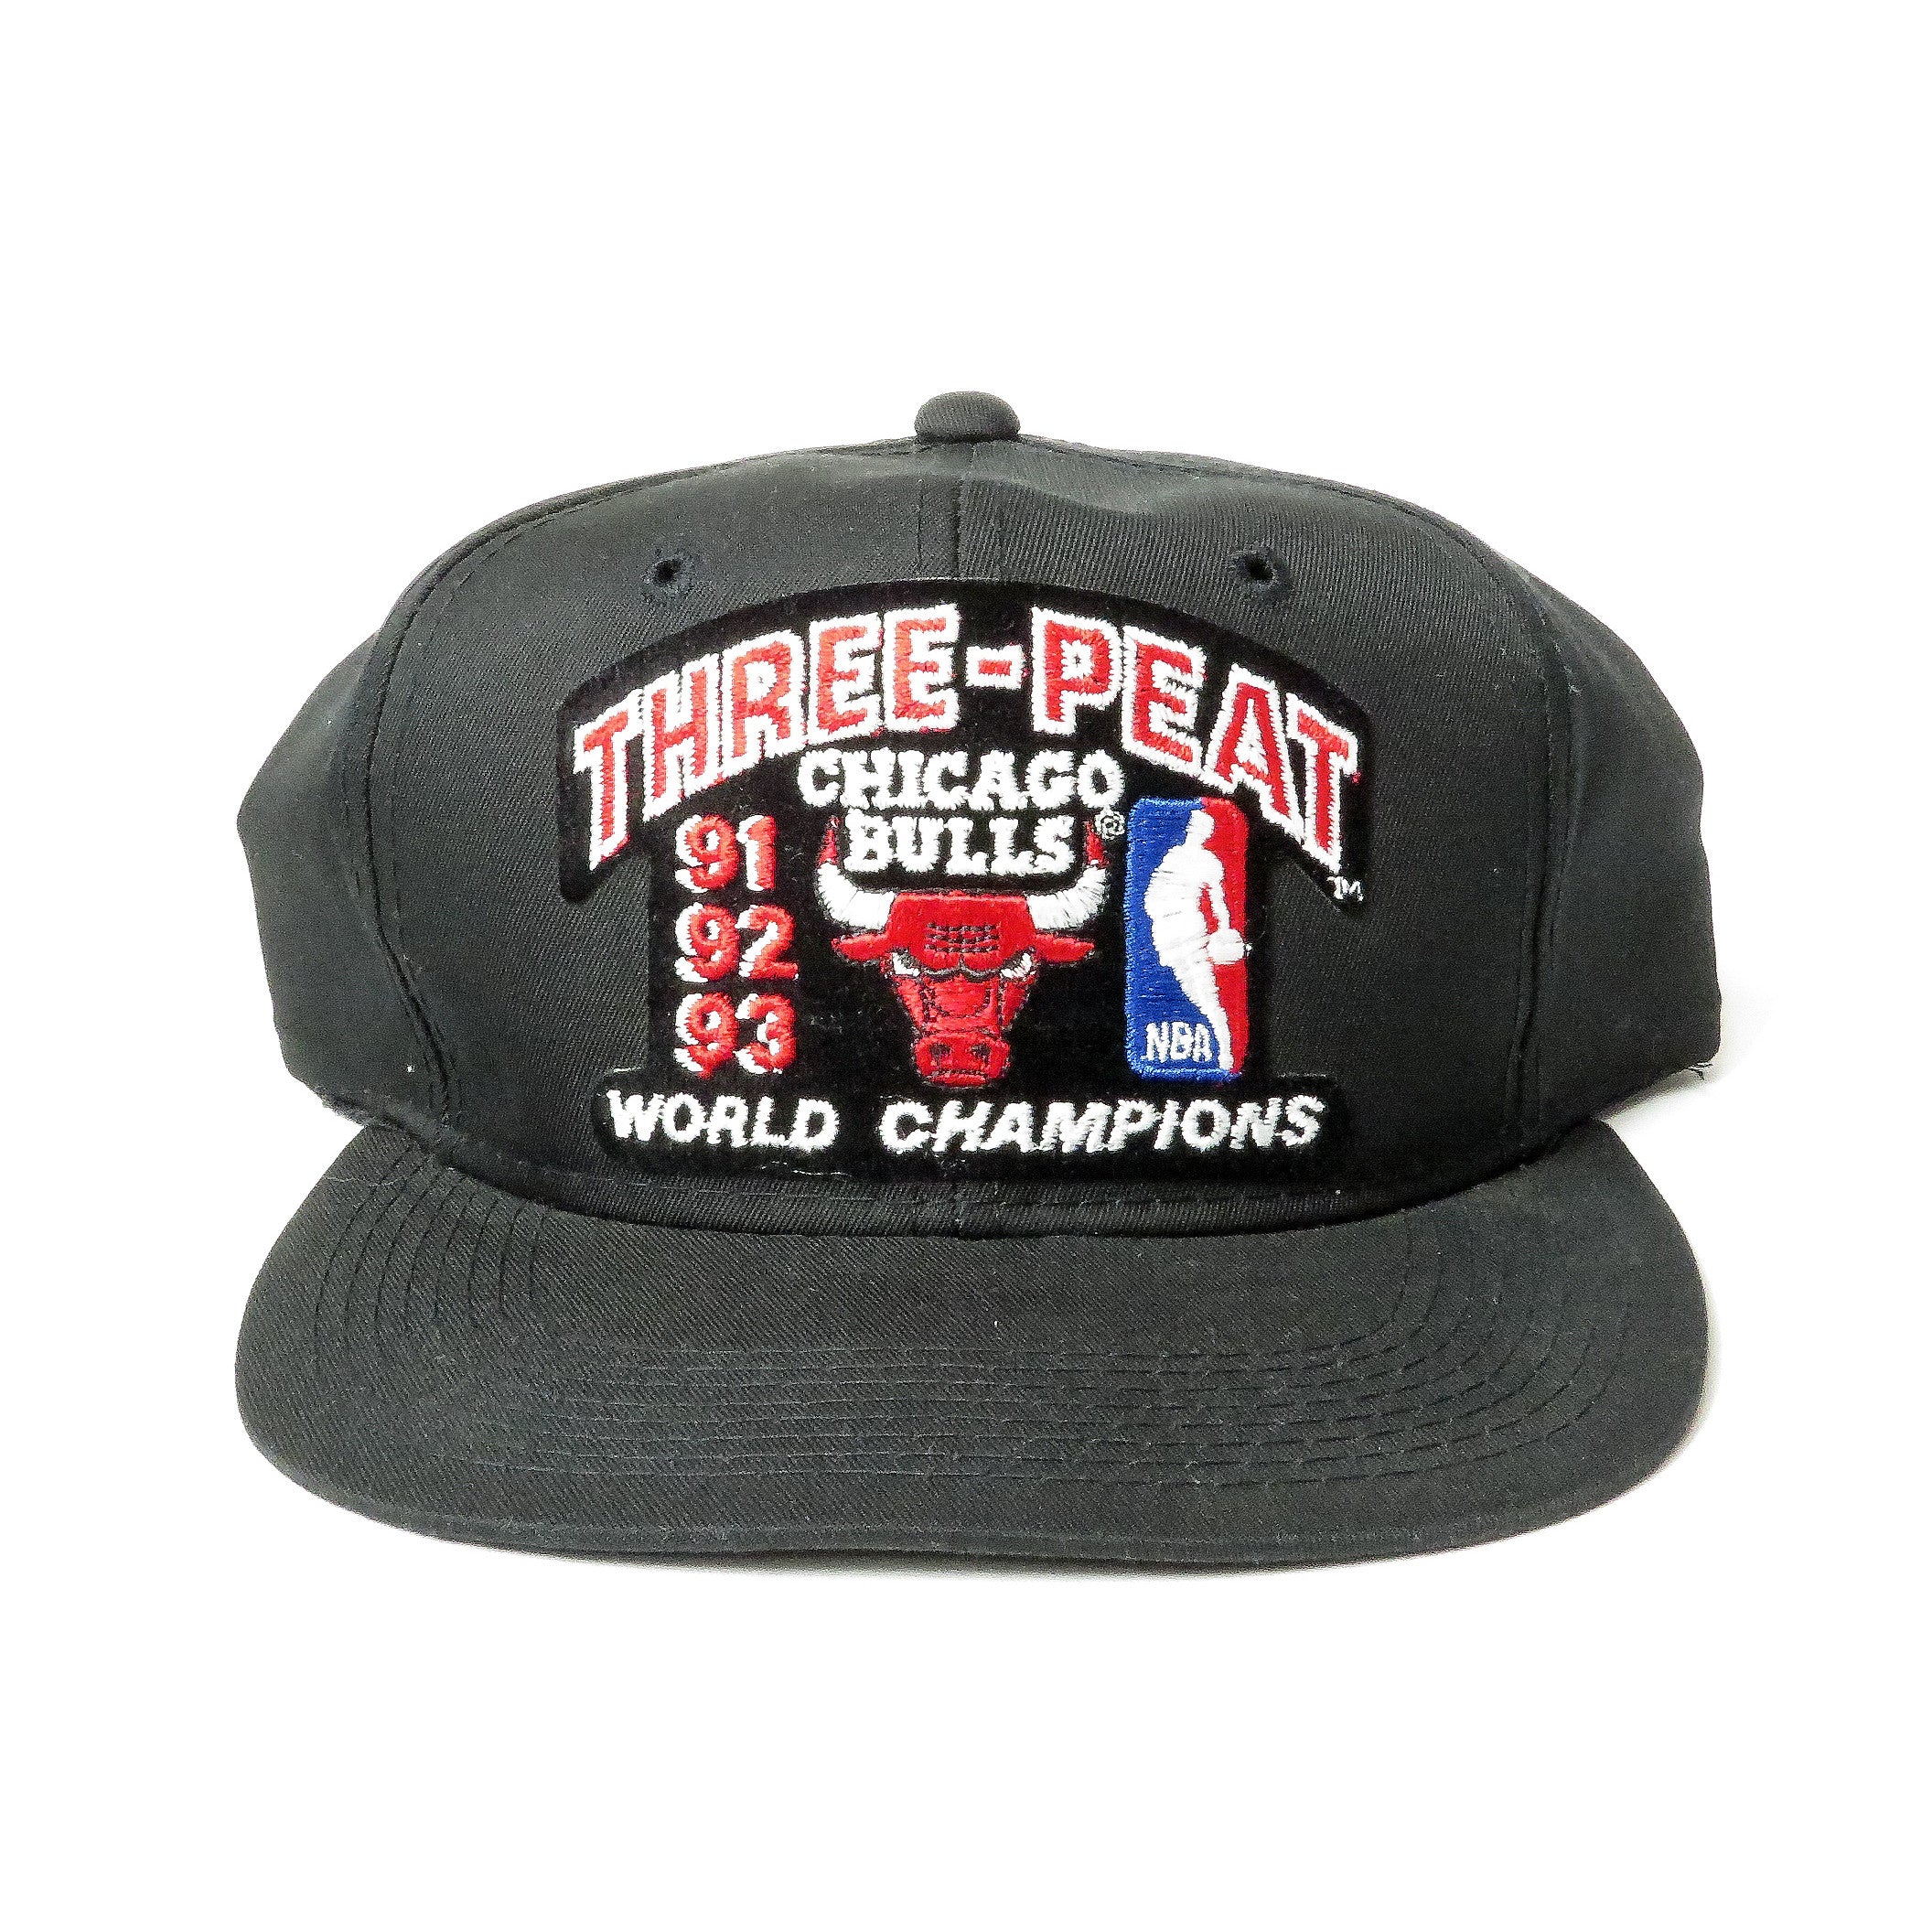 Vintage Rare Chicago Bulls NBA 3 Peat Champion Sports Hat Cap Vtg Snapback